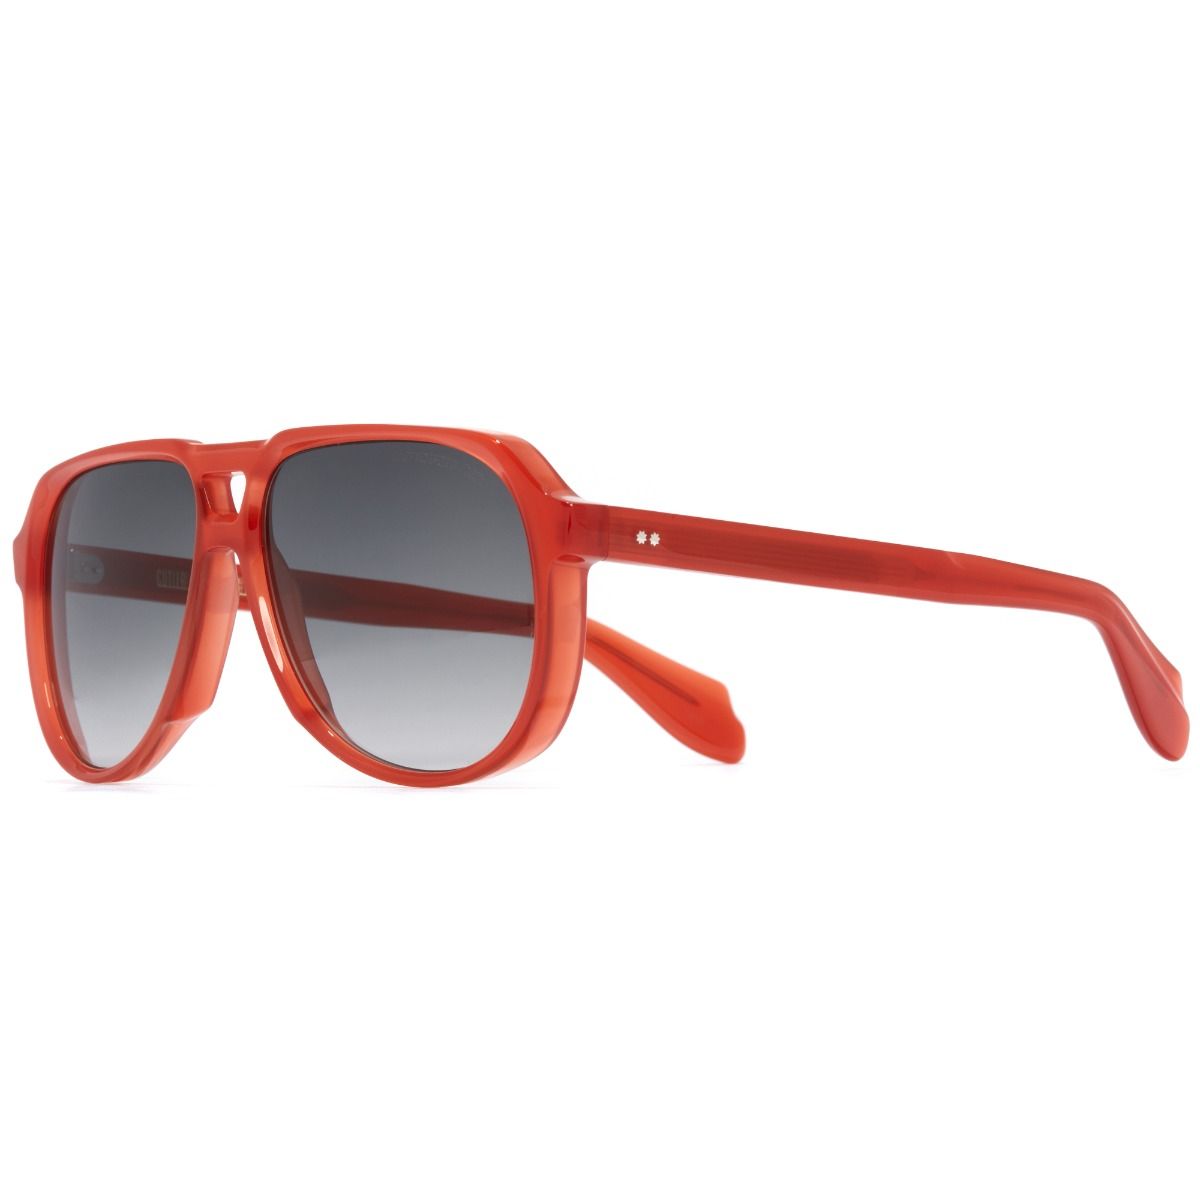 9782 Aviator Sunglasses